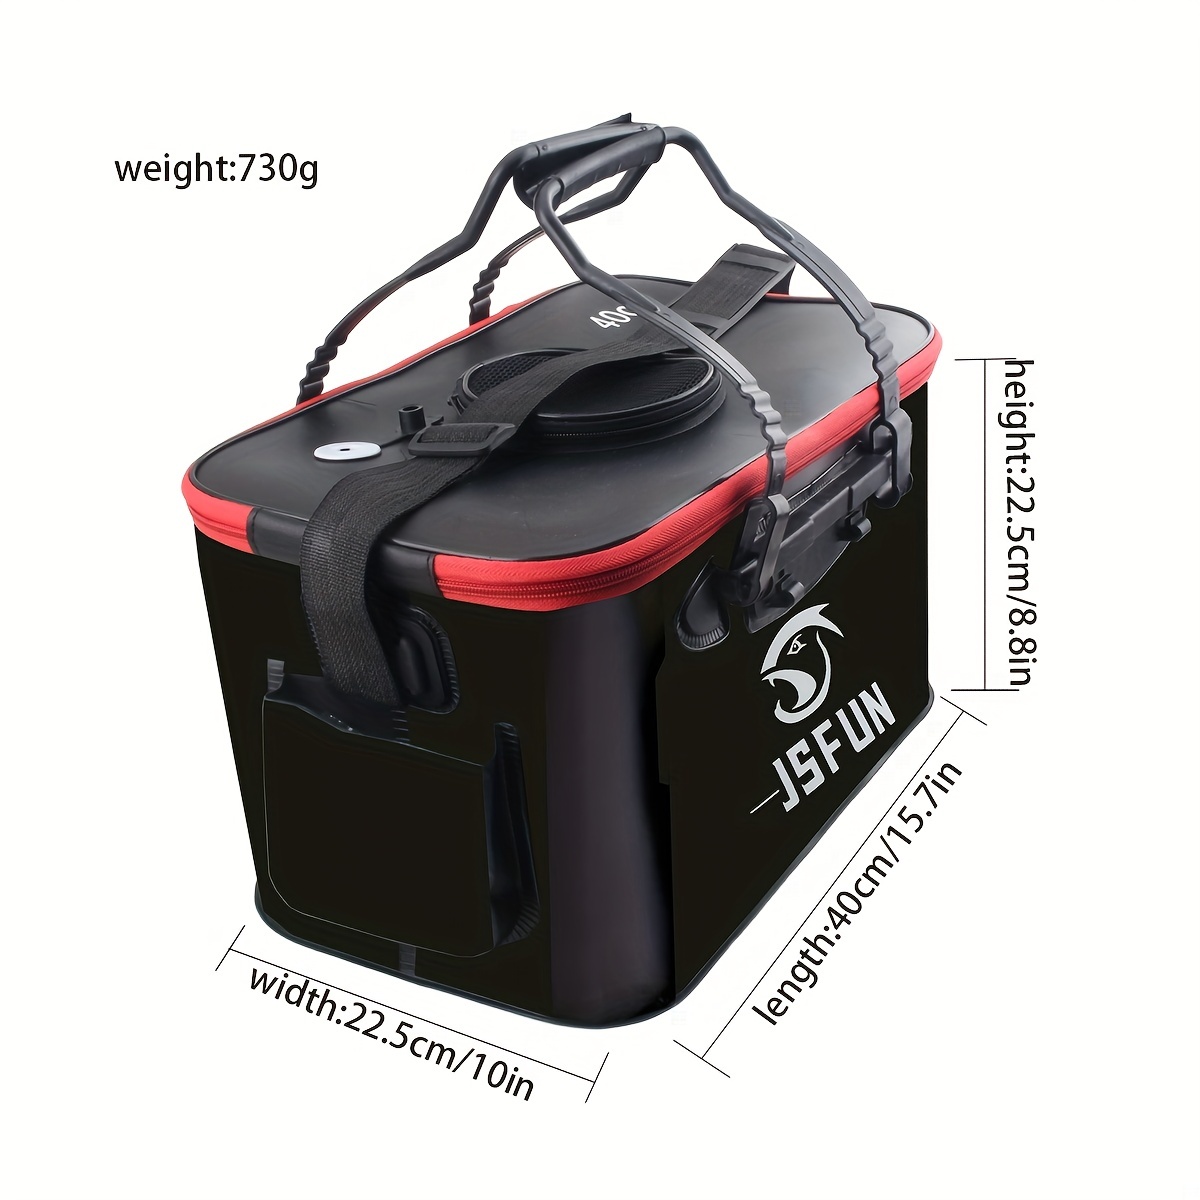 Portable Zipper Fishing Bucket Outdoor Folding EVA Fishing Bag